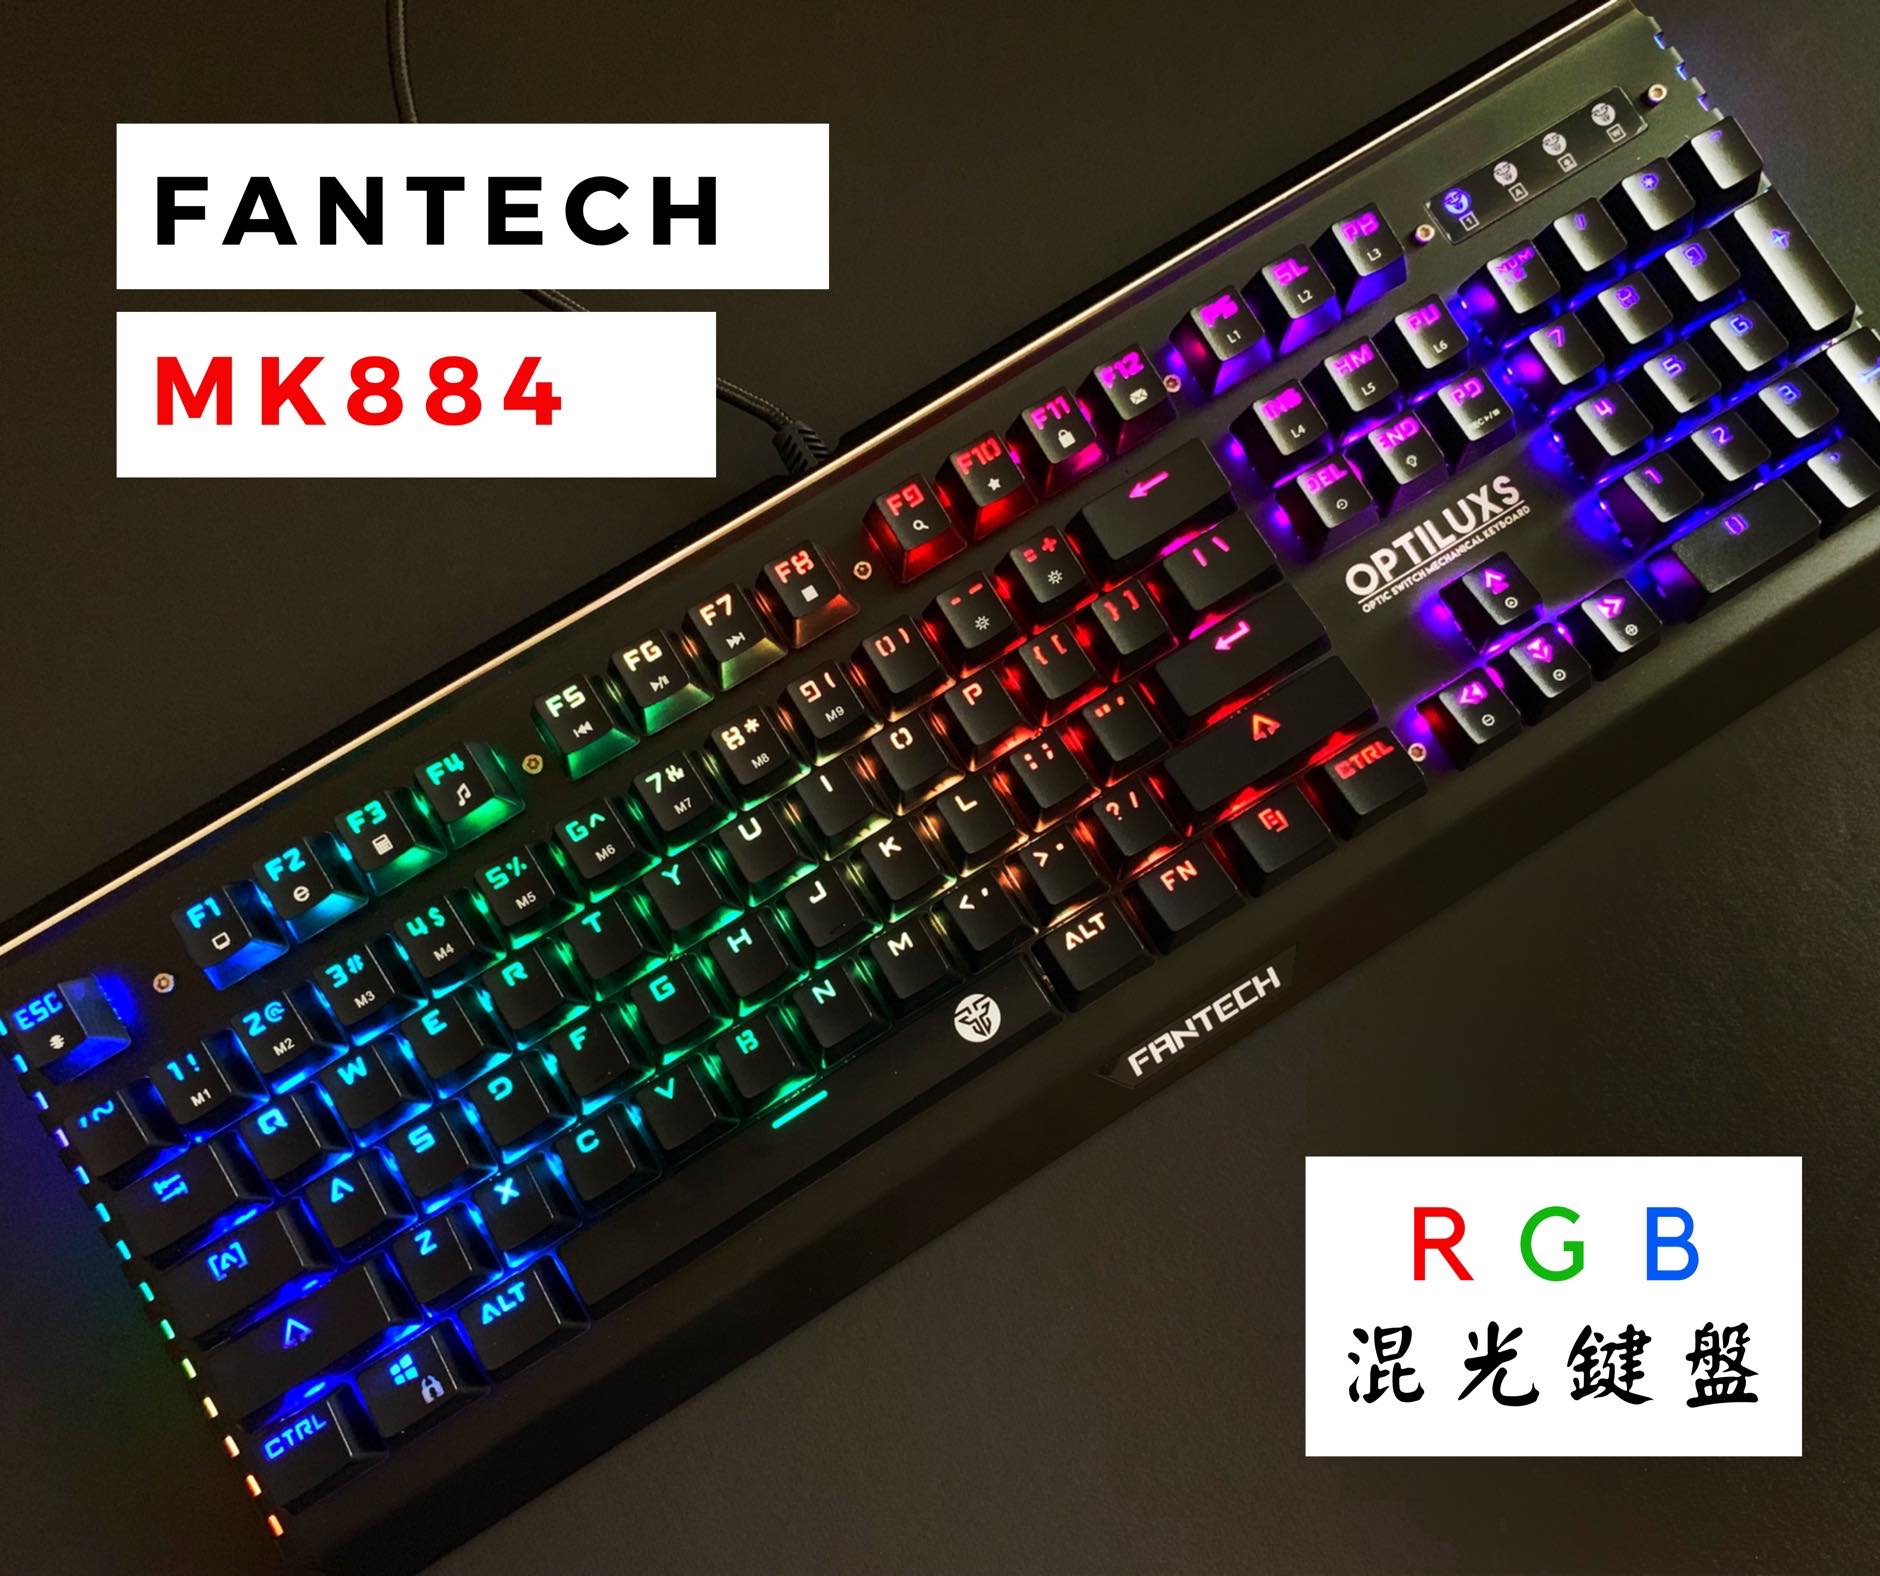 FANTECH MK884 機械式電競鍵盤 - RGB多彩燈光設計、光軸採用最新光學開關技術 - 2019鍵盤推薦, Fantech MK884, MK884開箱, RGB 特效, RGB特效, 光軸是什麼, 光軸是甚麼, 機械式鍵盤, 機械式鍵盤 ptt, 機械式鍵盤 rgb, 機械式鍵盤 rgb 推薦, 機械式鍵盤 介紹, 機械式鍵盤 優點, 機械式鍵盤 光軸, 機械式鍵盤 差別, 機械式鍵盤 推薦, 機械式鍵盤 清潔, 機械式鍵盤 清理, 機械式鍵盤 無線, 機械式鍵盤 英文, 機械式鍵盤 茶軸, 機械式鍵盤 軸, 機械式鍵盤 鍵帽, 機械式鍵盤 防水, 機械式鍵盤 青軸, 機械式鍵盤 青軸 推薦, 機械式鍵盤ptt, 機械式鍵盤光軸, 機械式鍵盤推薦, 機械式鍵盤軸, 機械式鍵盤青軸, 機械式電競鍵盤, 機械鍵盤, 機械鍵盤 品牌, 機械鍵盤 推薦, 機械鍵盤 無線, 機械鍵盤 軸, 機械鍵盤 青軸, 機械鍵盤推薦, 跑跑卡丁車 鍵盤, 跑跑卡丁車 鍵盤 推薦, 跑跑卡丁車 鍵盤設定, 跑跑卡丁車 鍵盤靈敏度, 跑跑卡丁車鍵盤, 防水防塵, 防水電競鍵盤 - 科技生活 - teXch